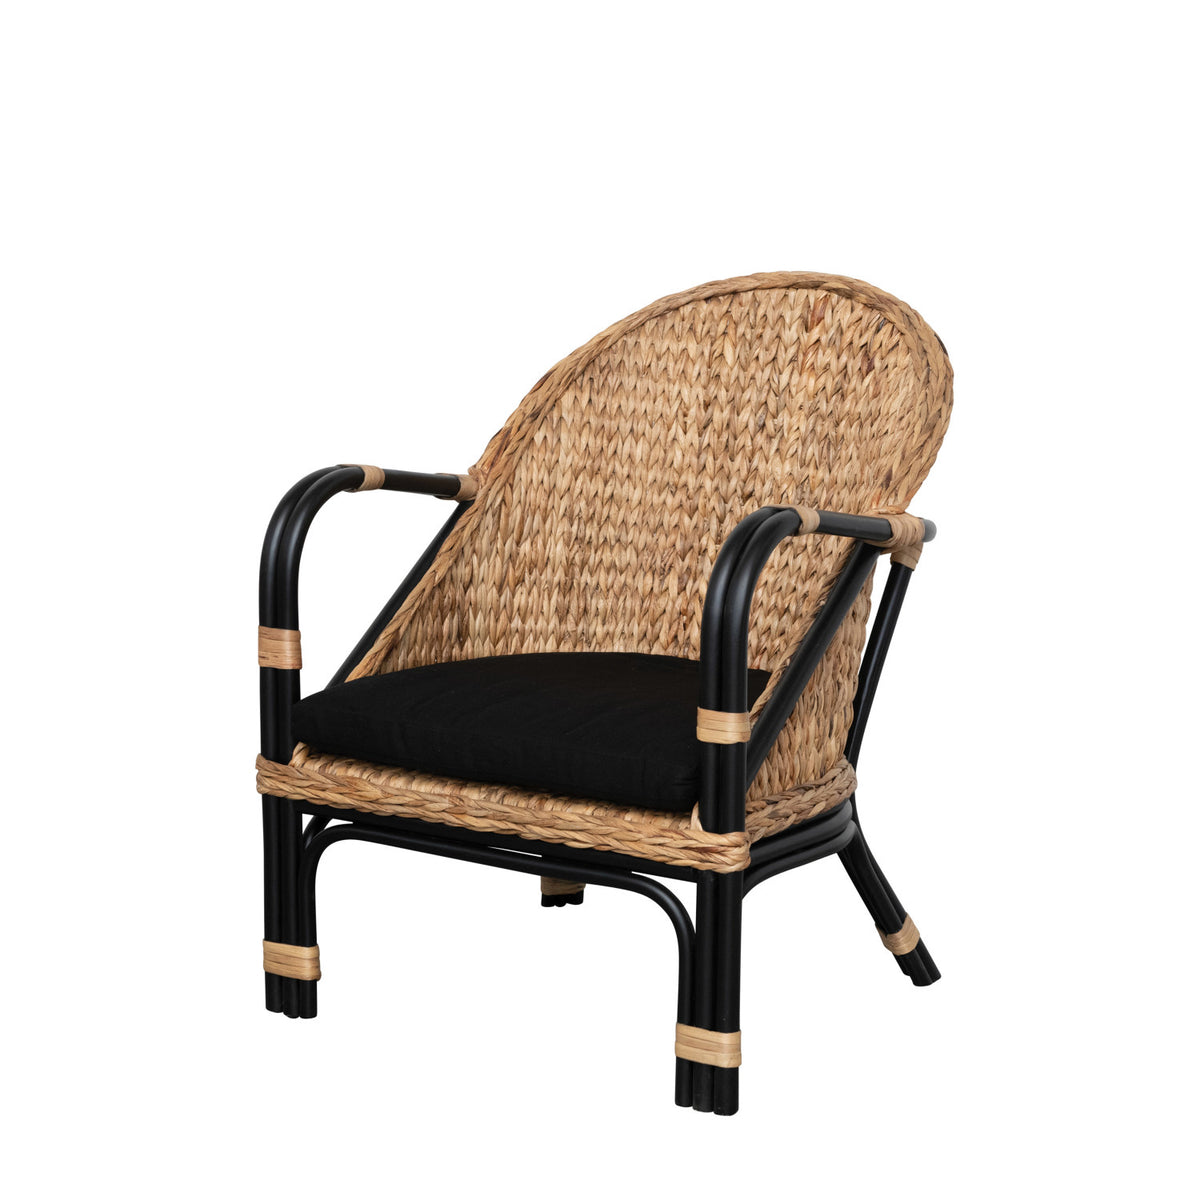 Hand-Woven Rattan & Water Hyacinth Arm Chair